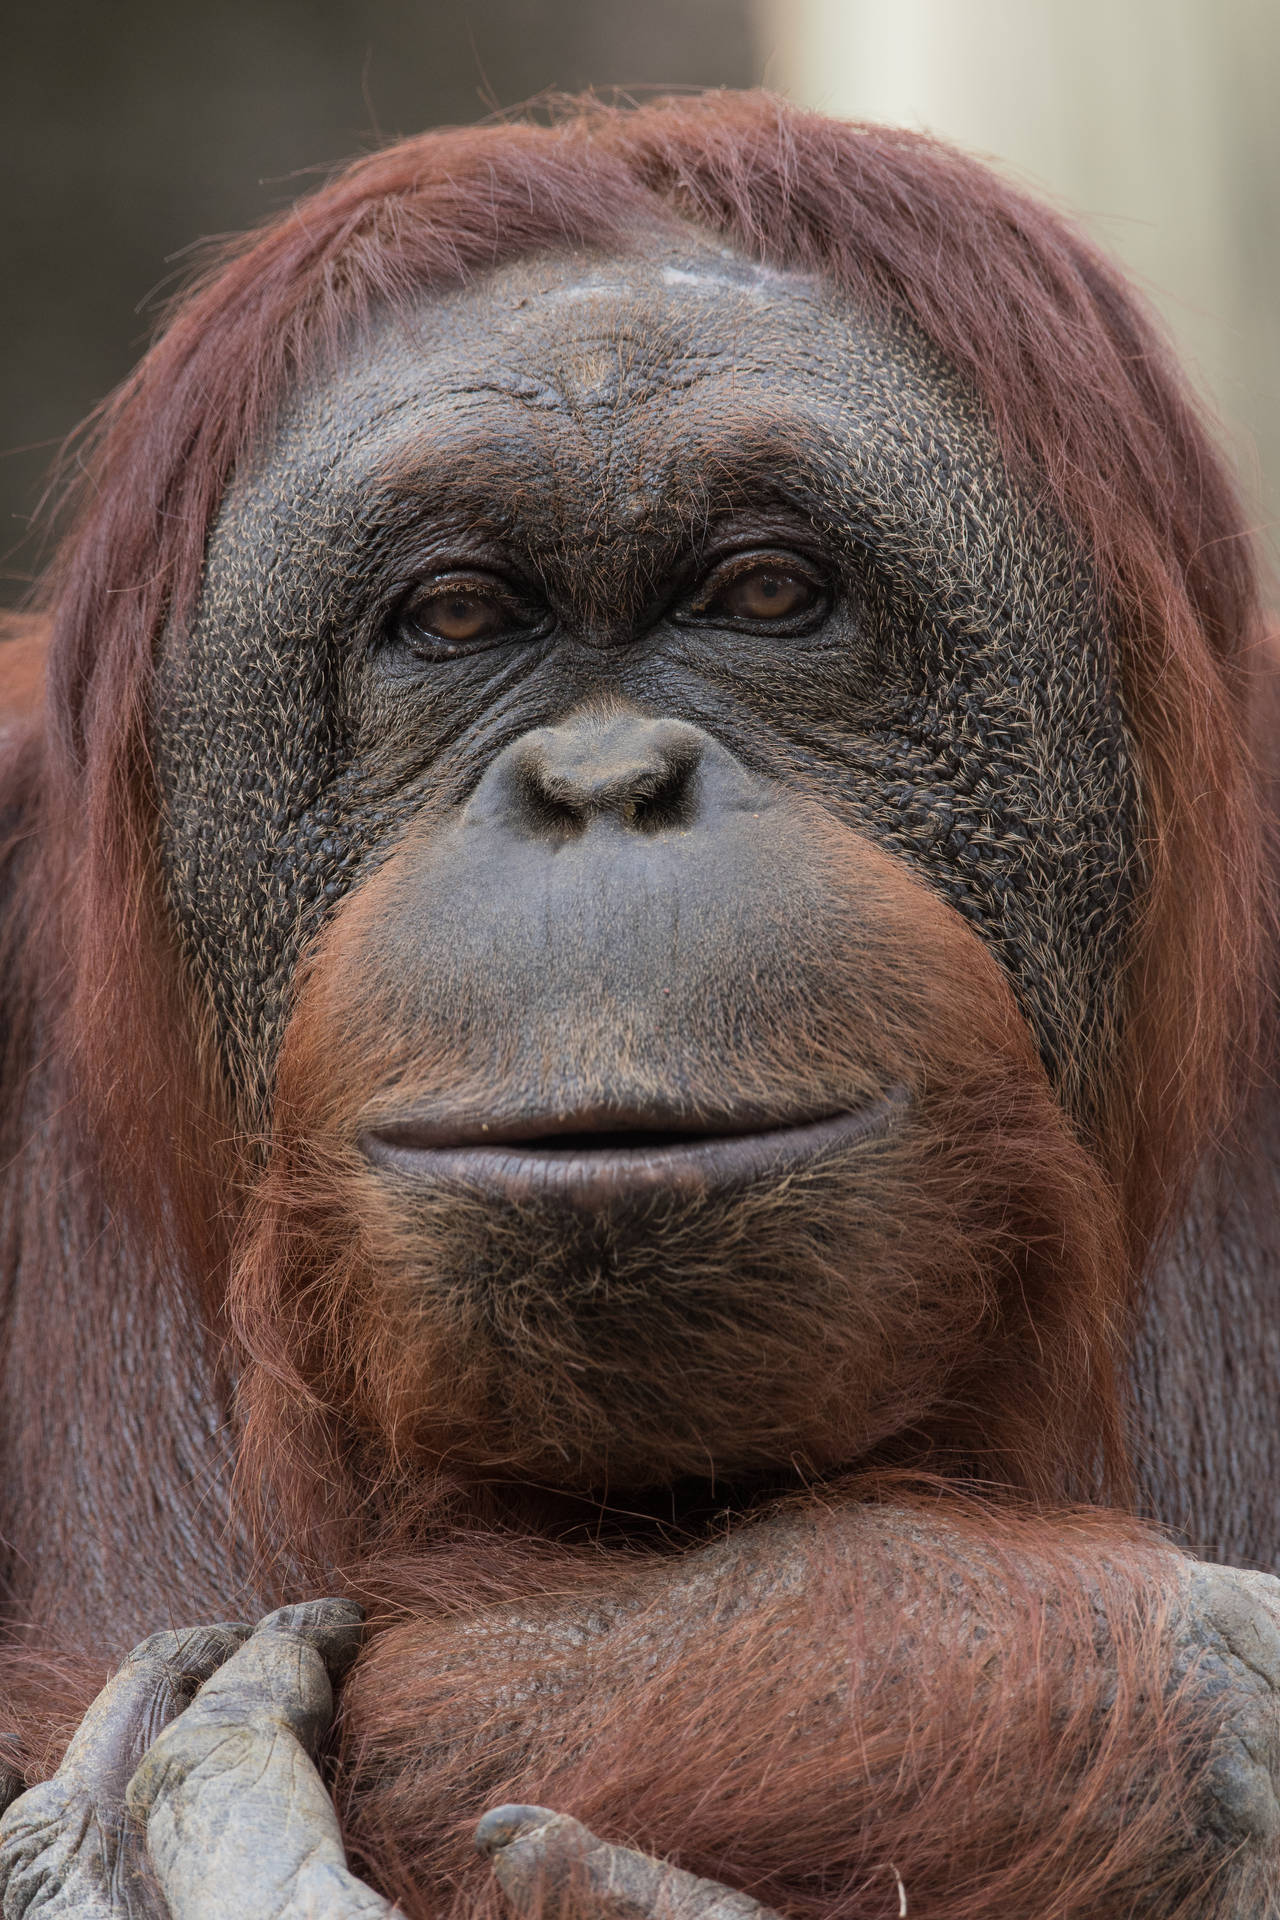 Orangutan Up Close Awesome Animal